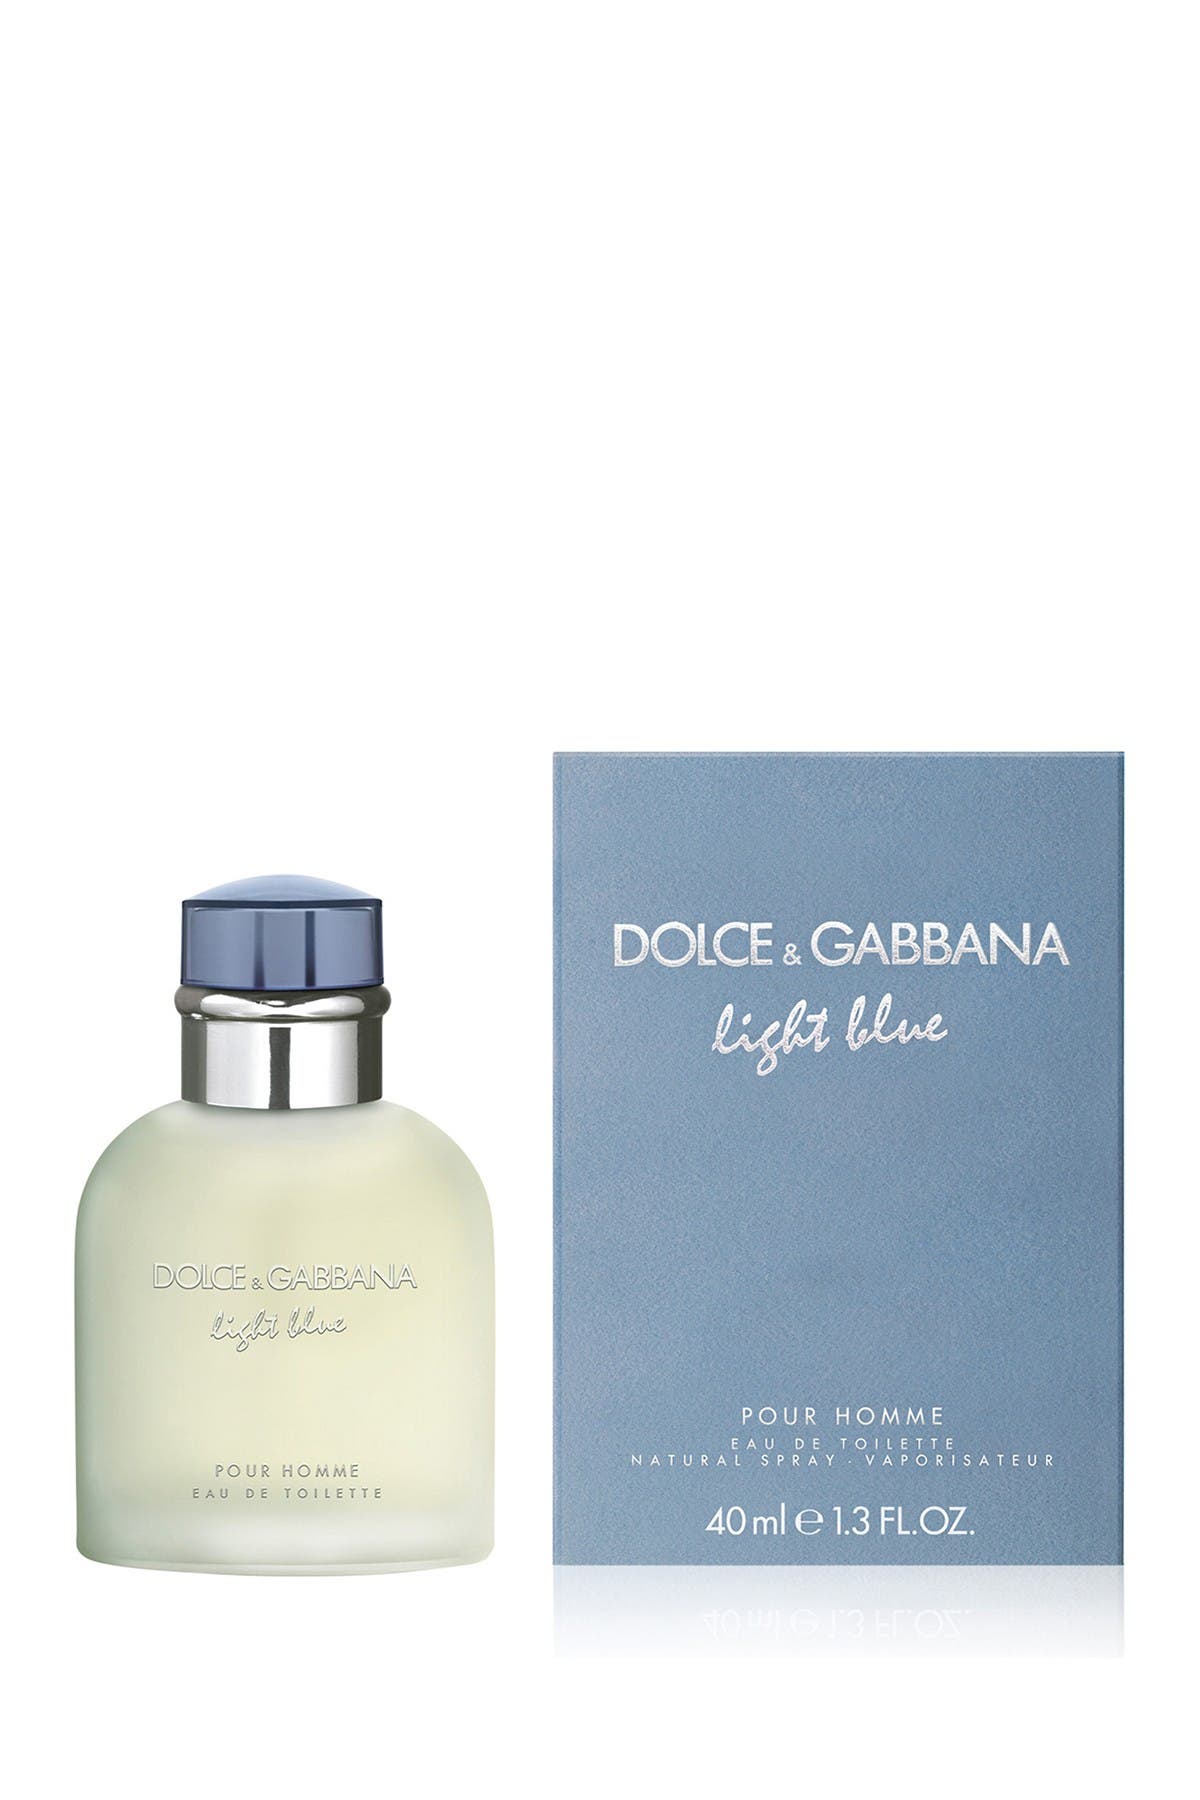 dolce gabbana light blue 1.3 oz